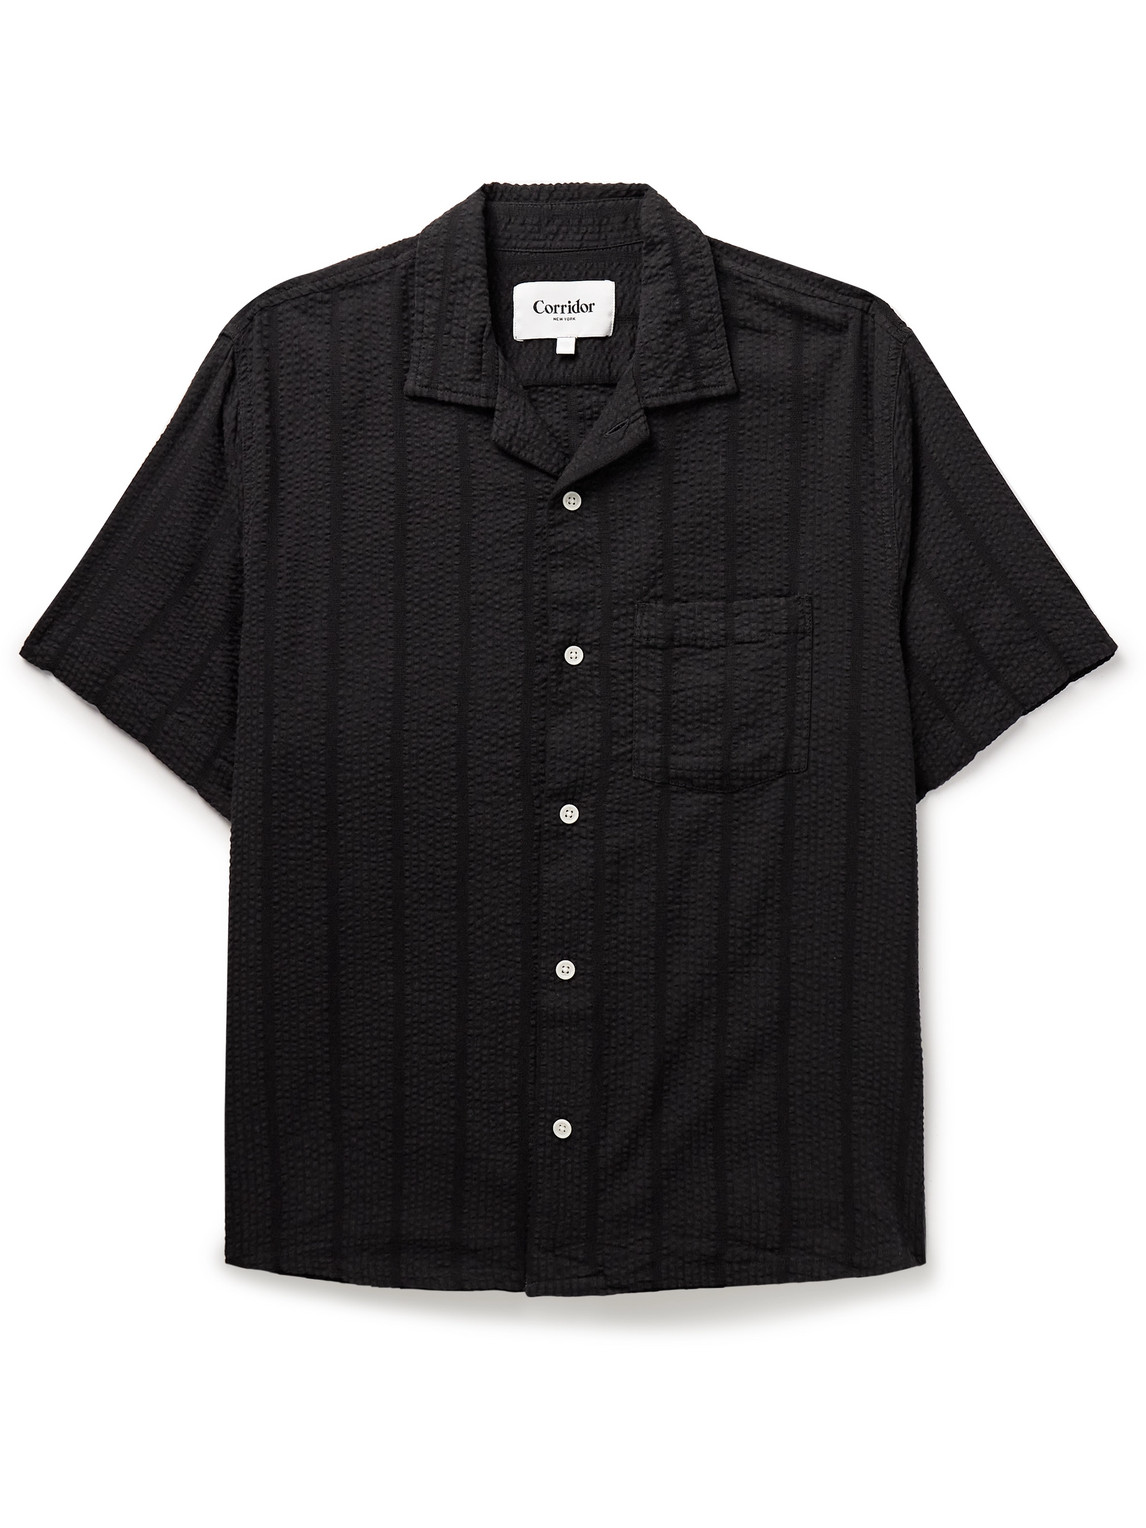 Camp-Collar Striped Cotton-Seersucker Shirt